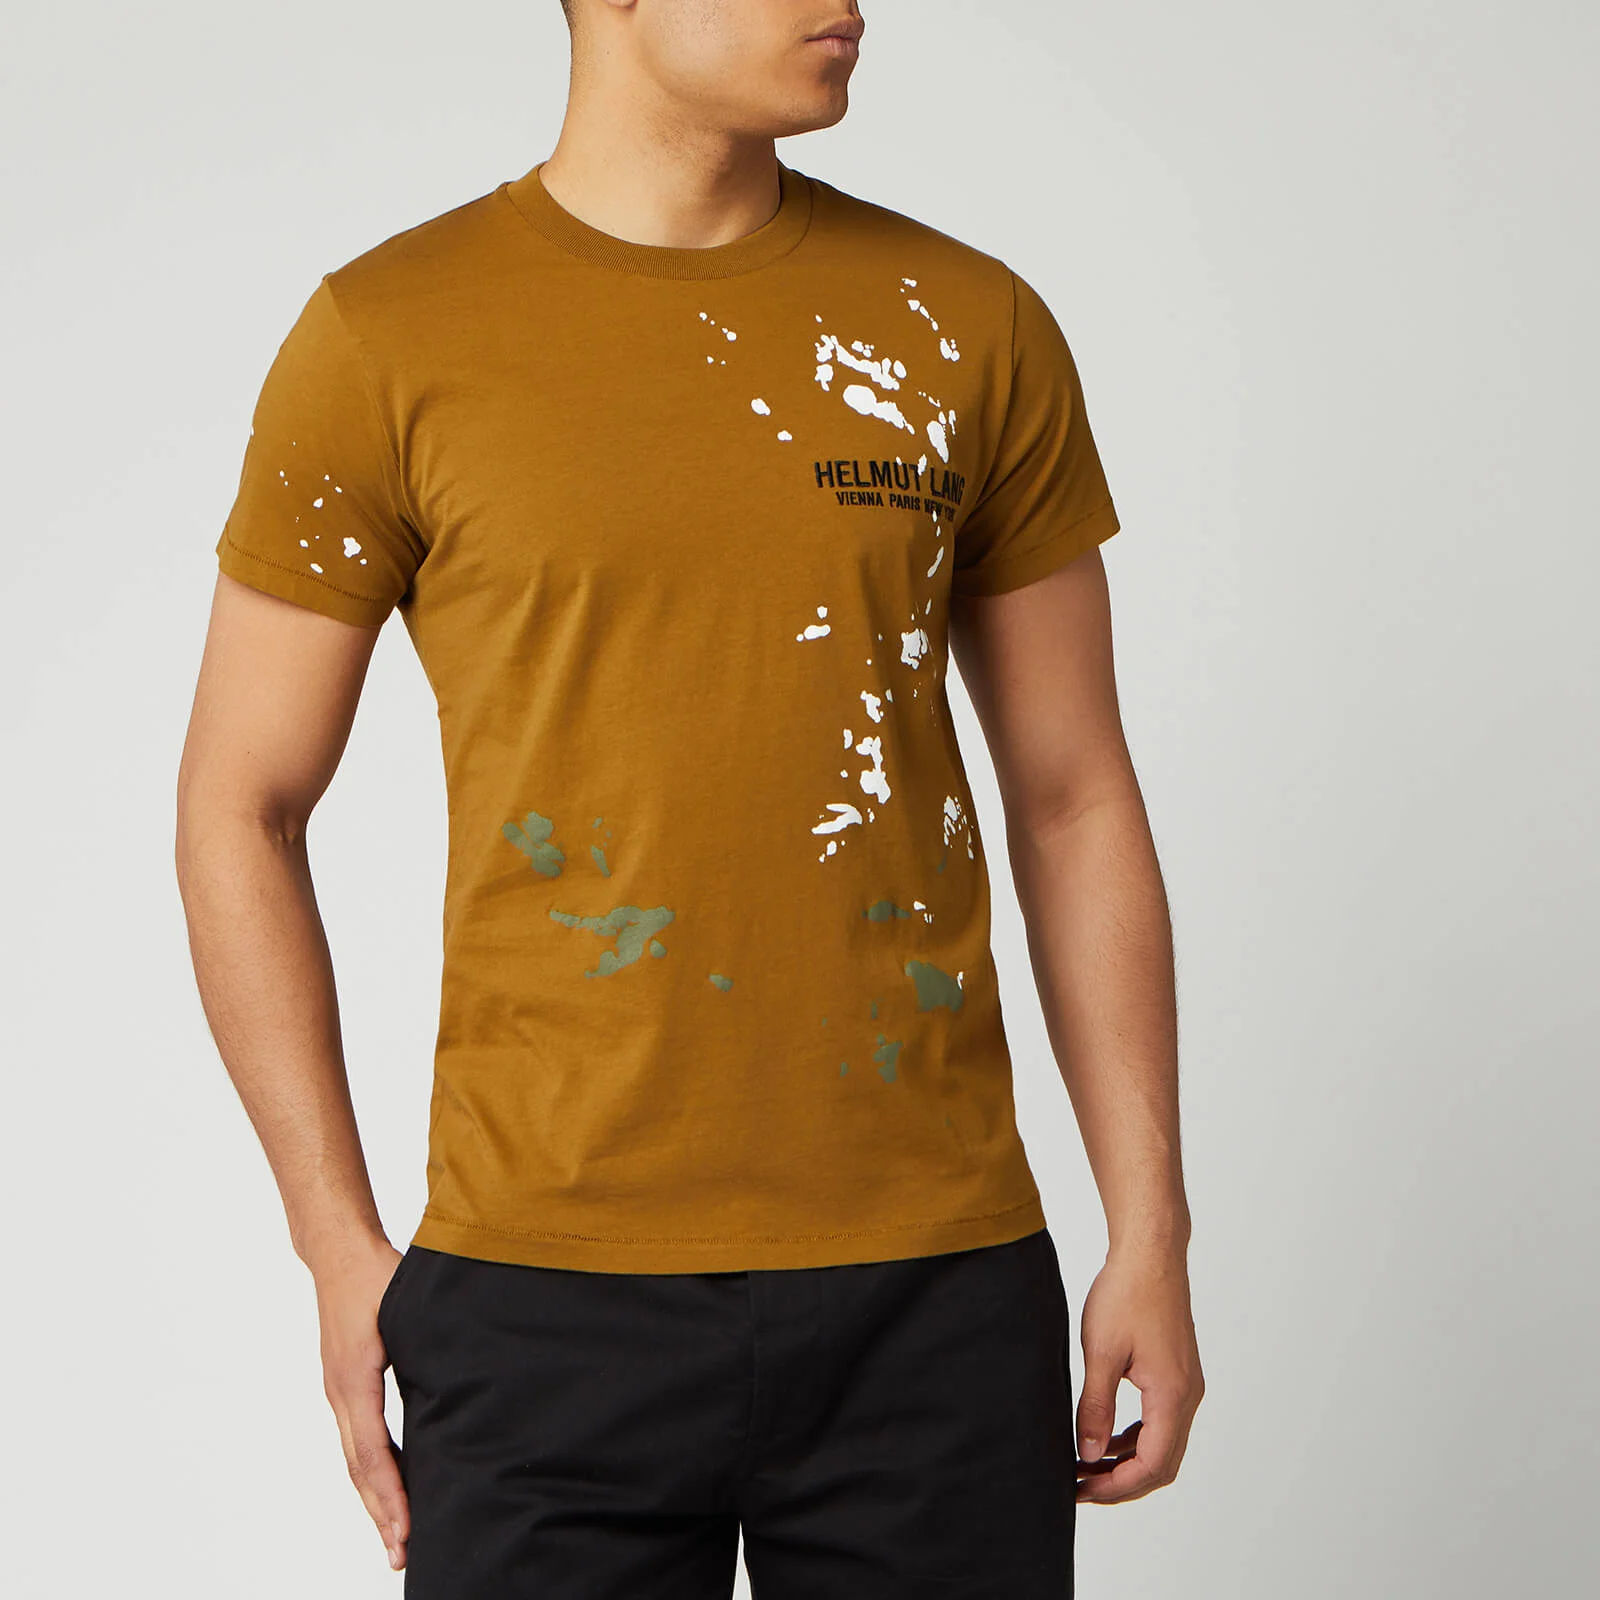 Helmut Lang Men's Standard Painter T-Shirt - Bronze Image 1